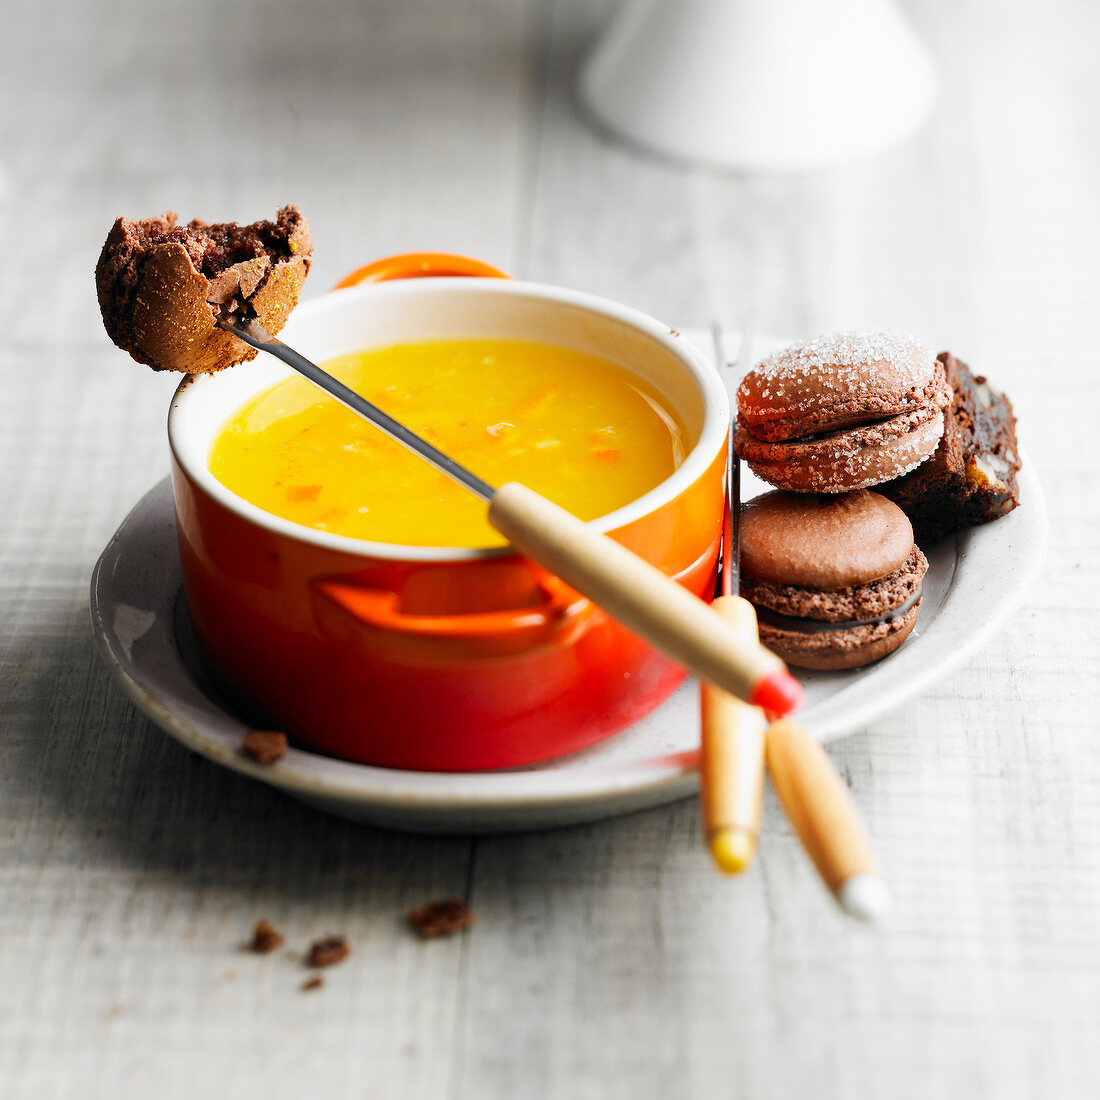 Orange juice fondue with chocolate macaroons